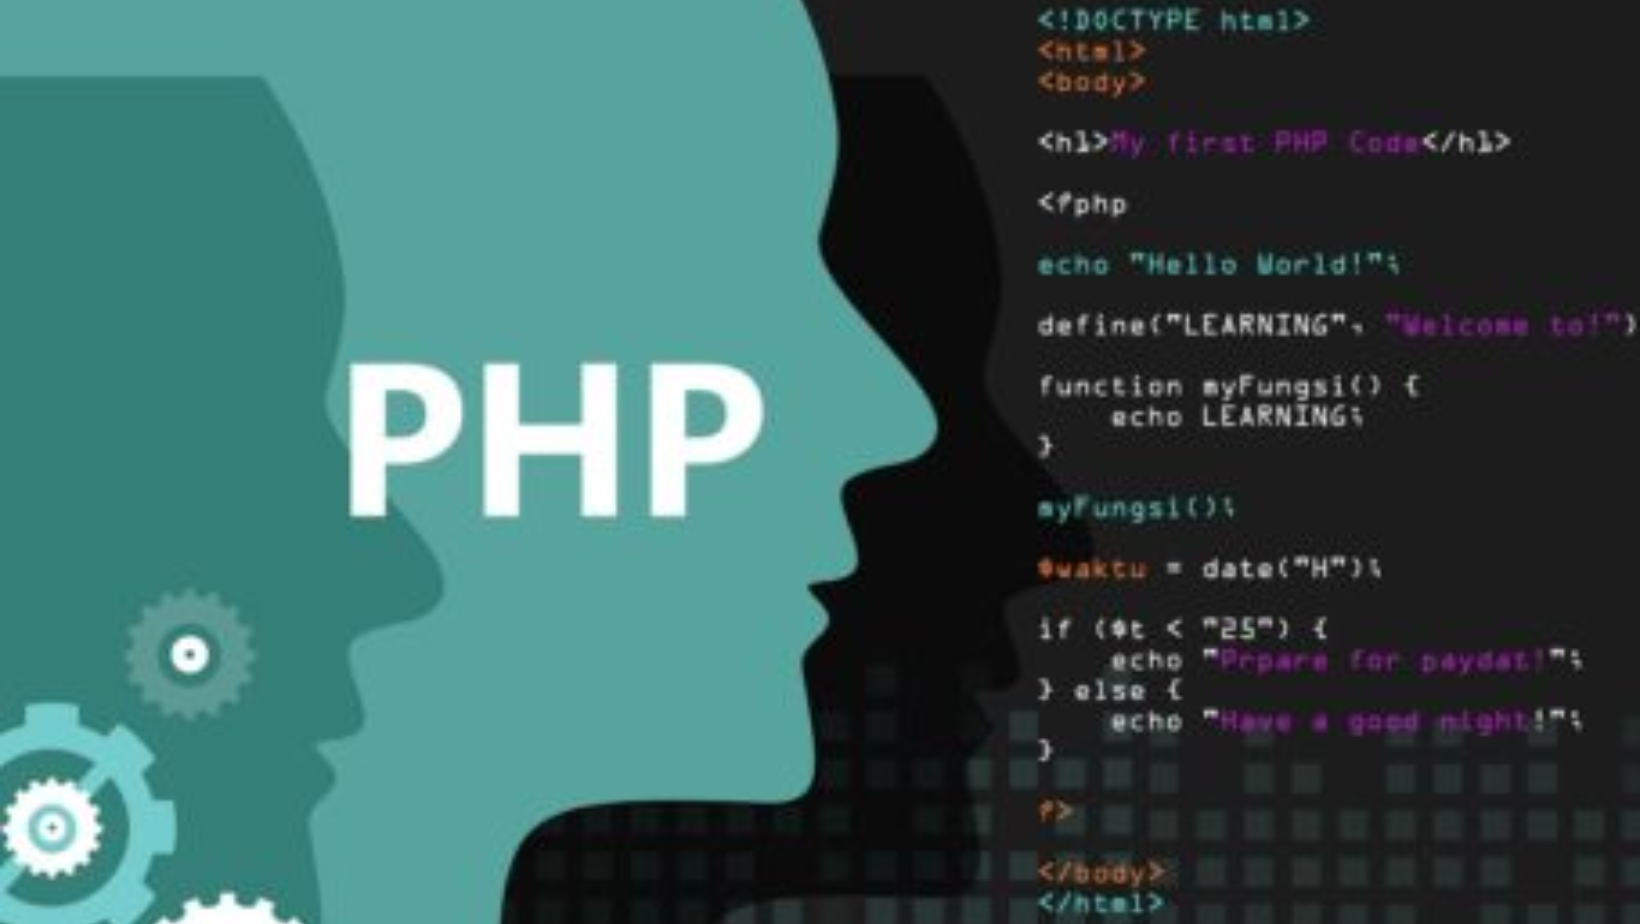 PHP Basics